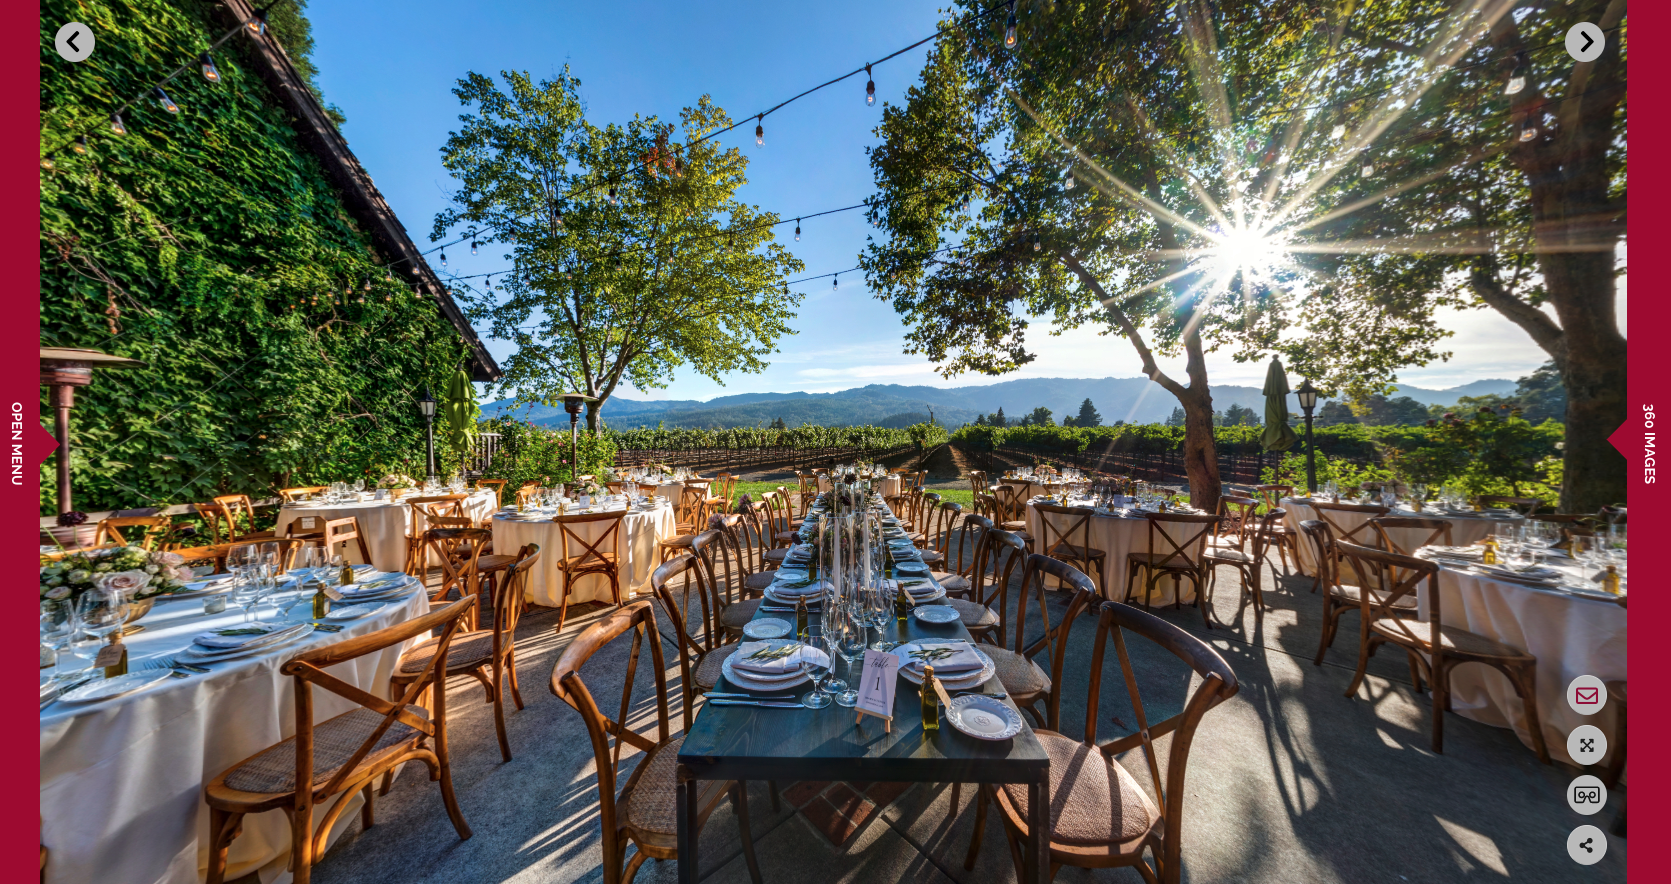 Harvest Inn (St. Helena, Napa Valley, CA) - Wedding Reception Setup - TrueTour 360° 